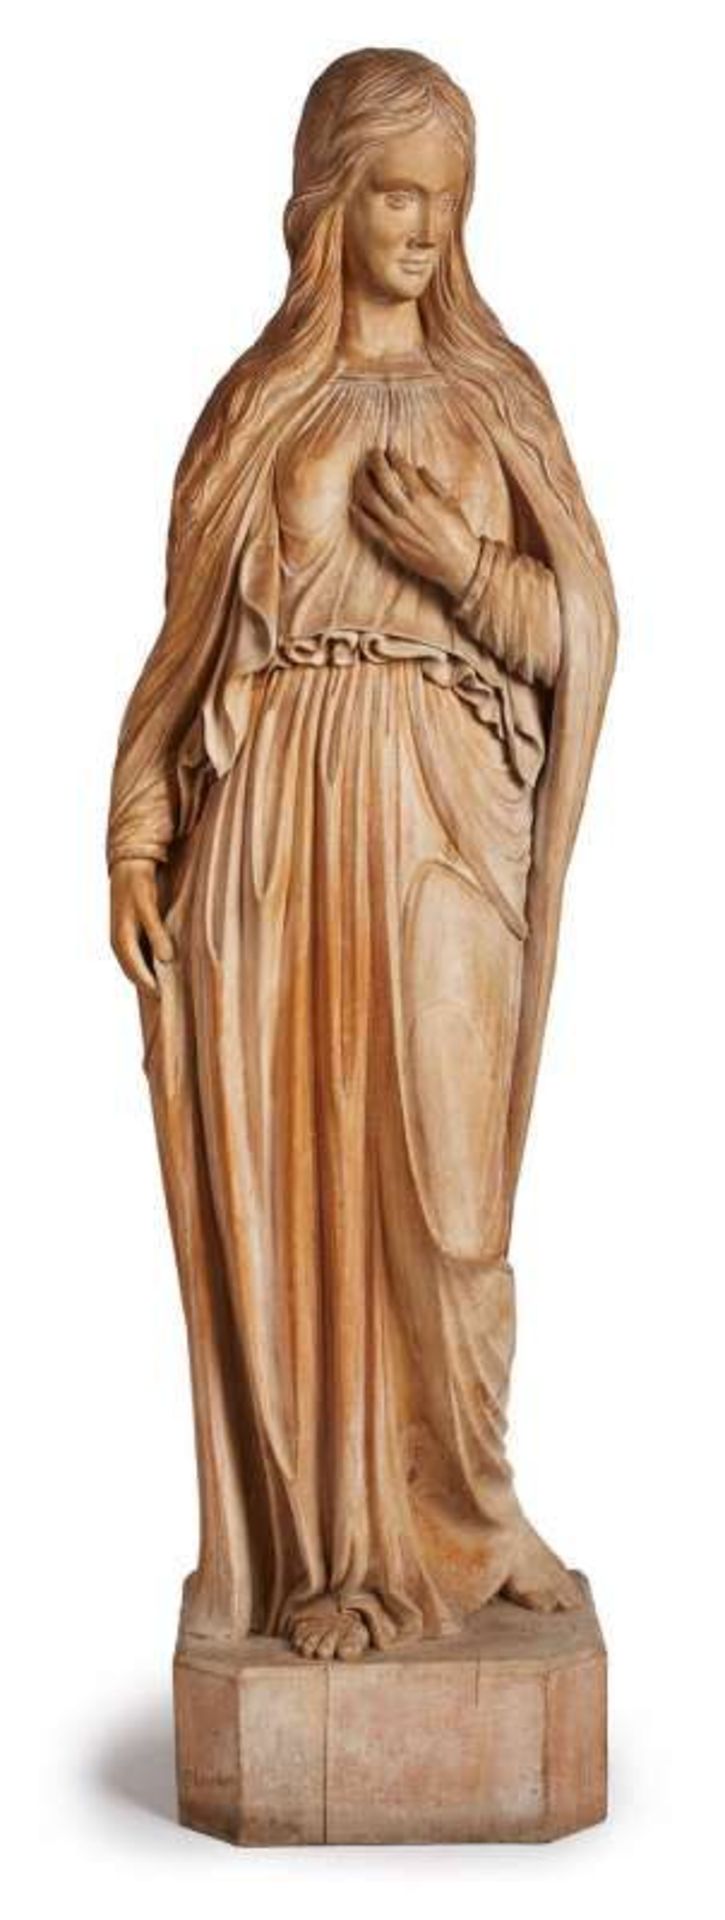 Gr. Standfigur Maria Magdalena, Nazarener-Stil, um 1900. Lindenholz, vollrd. geschnitzt. - Bild 2 aus 3